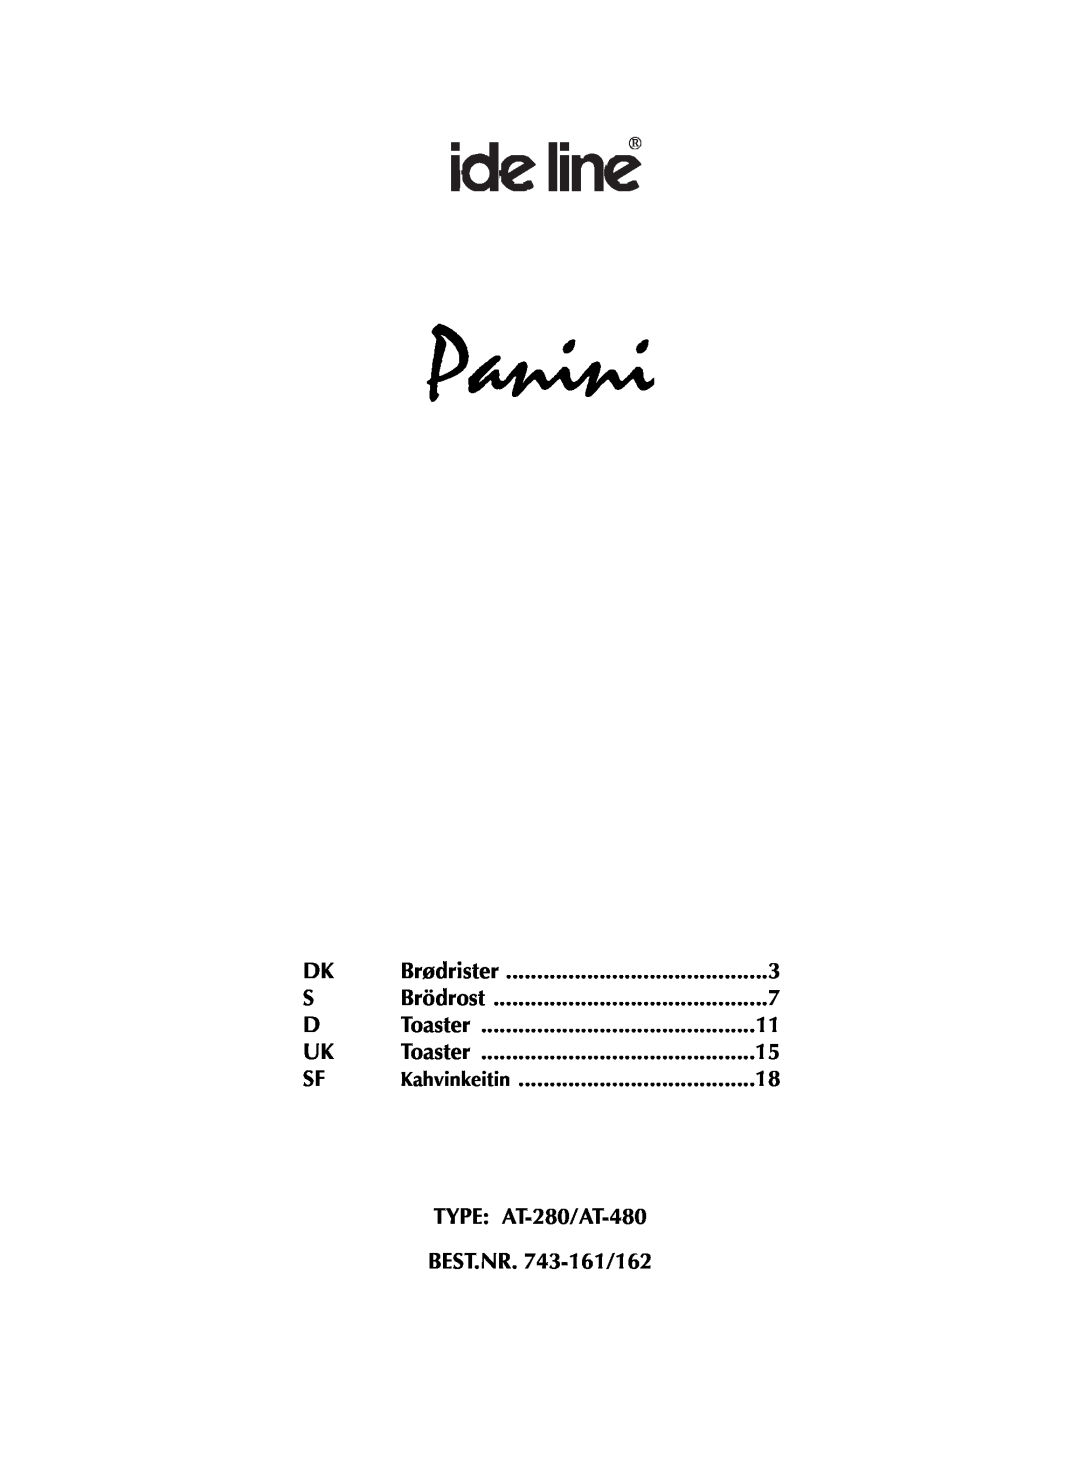 Melissa manual Panini, TYPE AT-280/AT-480 BEST.NR. 743-161/162 